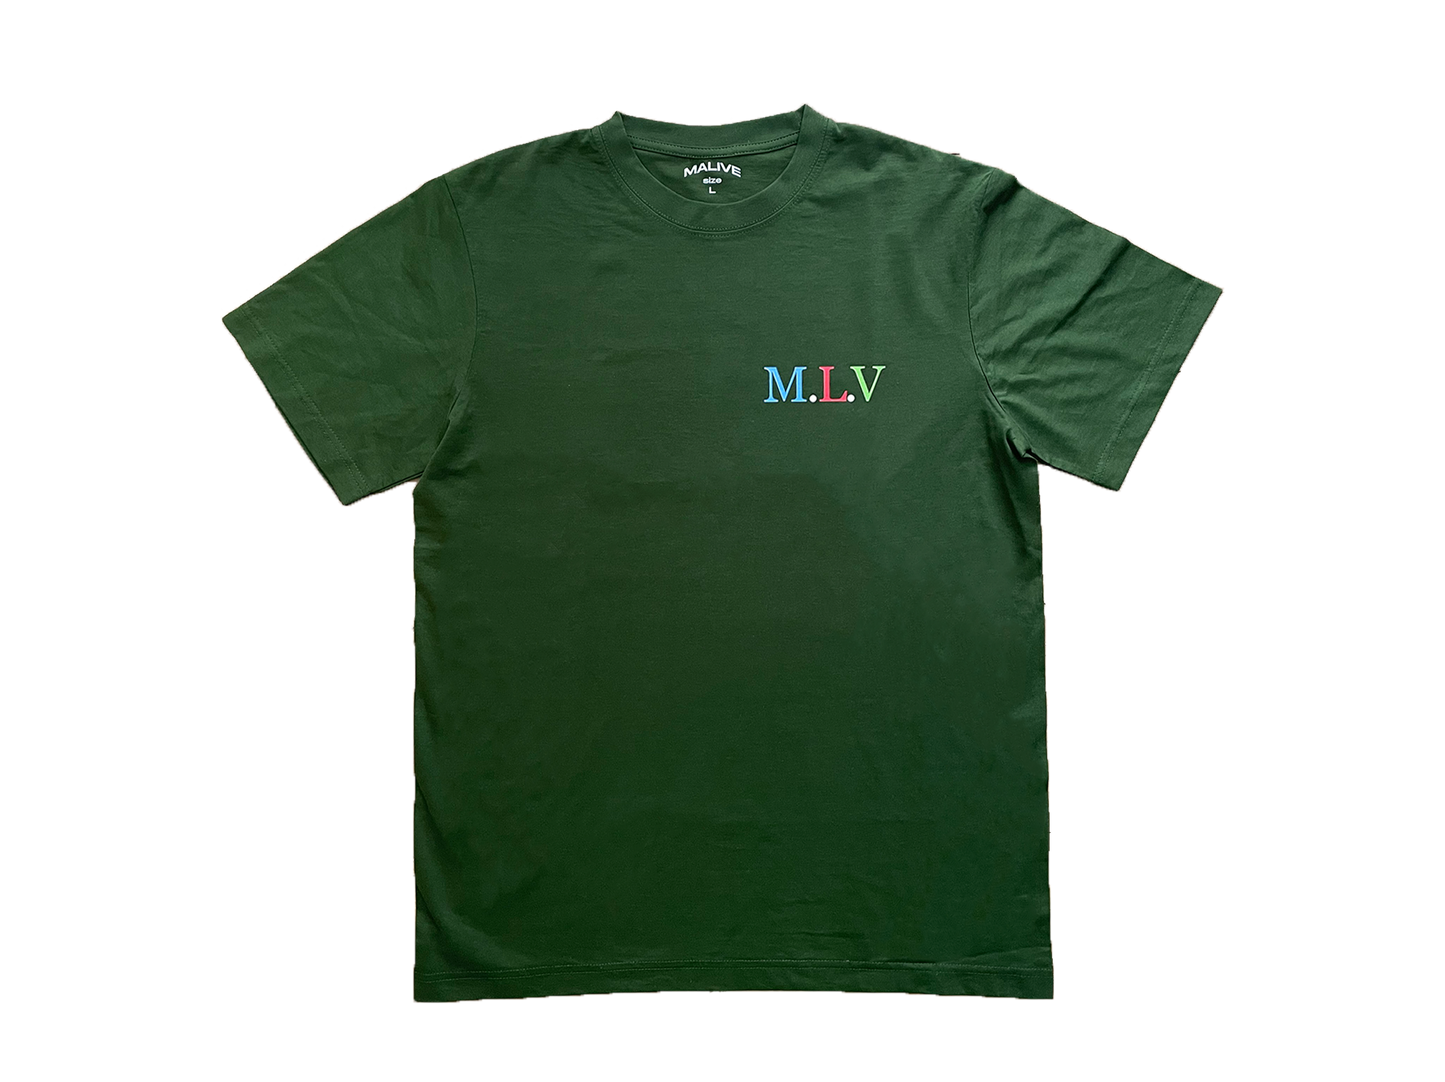 Malive Break The Silence T-Shirt